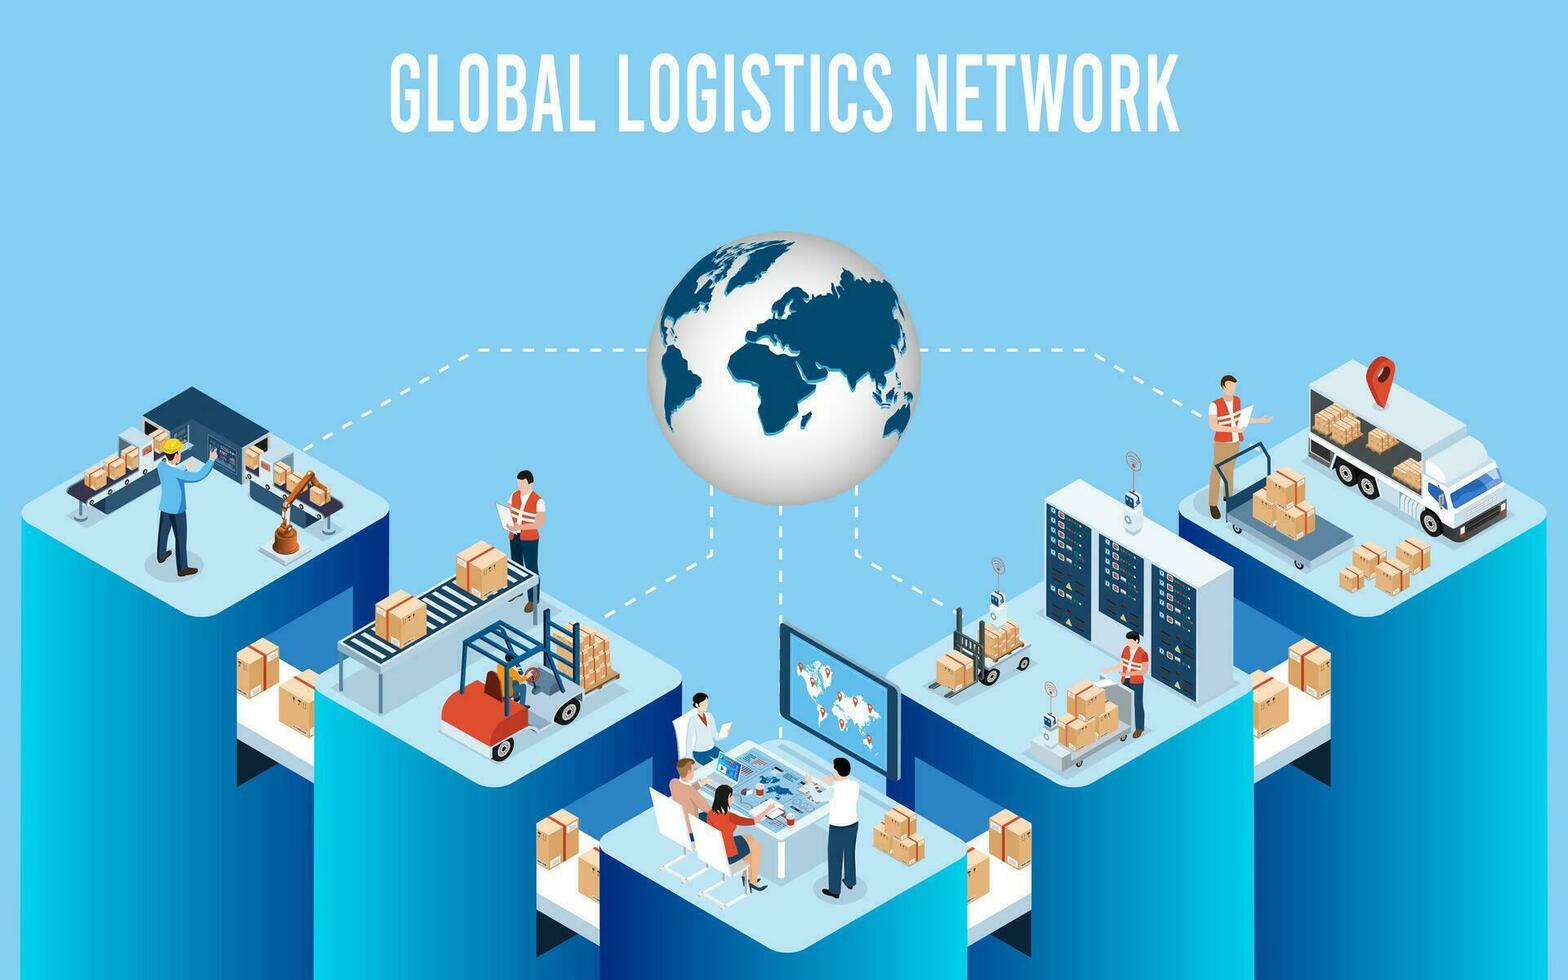 3d isométrica global logística red concepto con transporte operación servicio, suministro cadena administración - scm, empresa logística procesos. vector ilustración eps 10